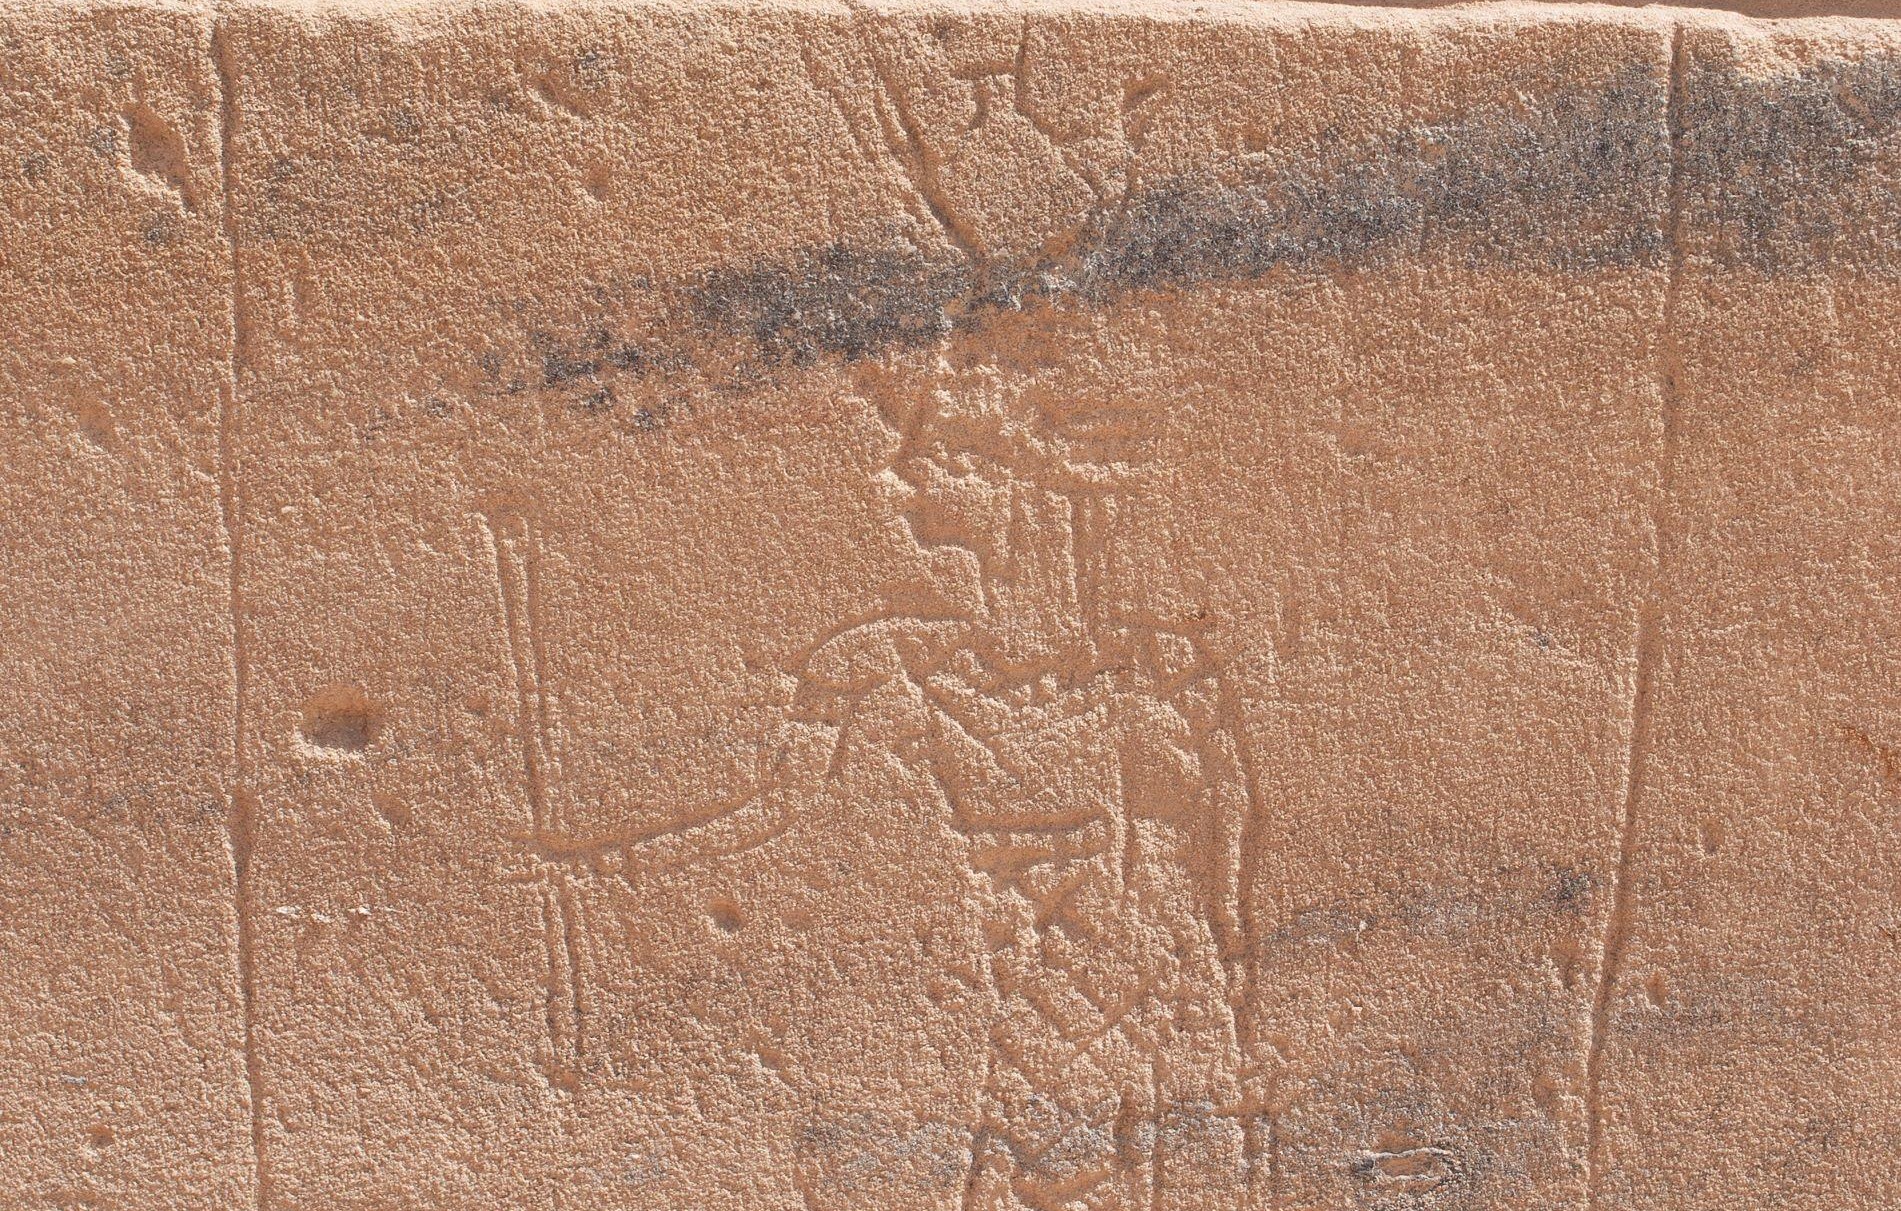 Изображение Исиды на стенах храма на Филах